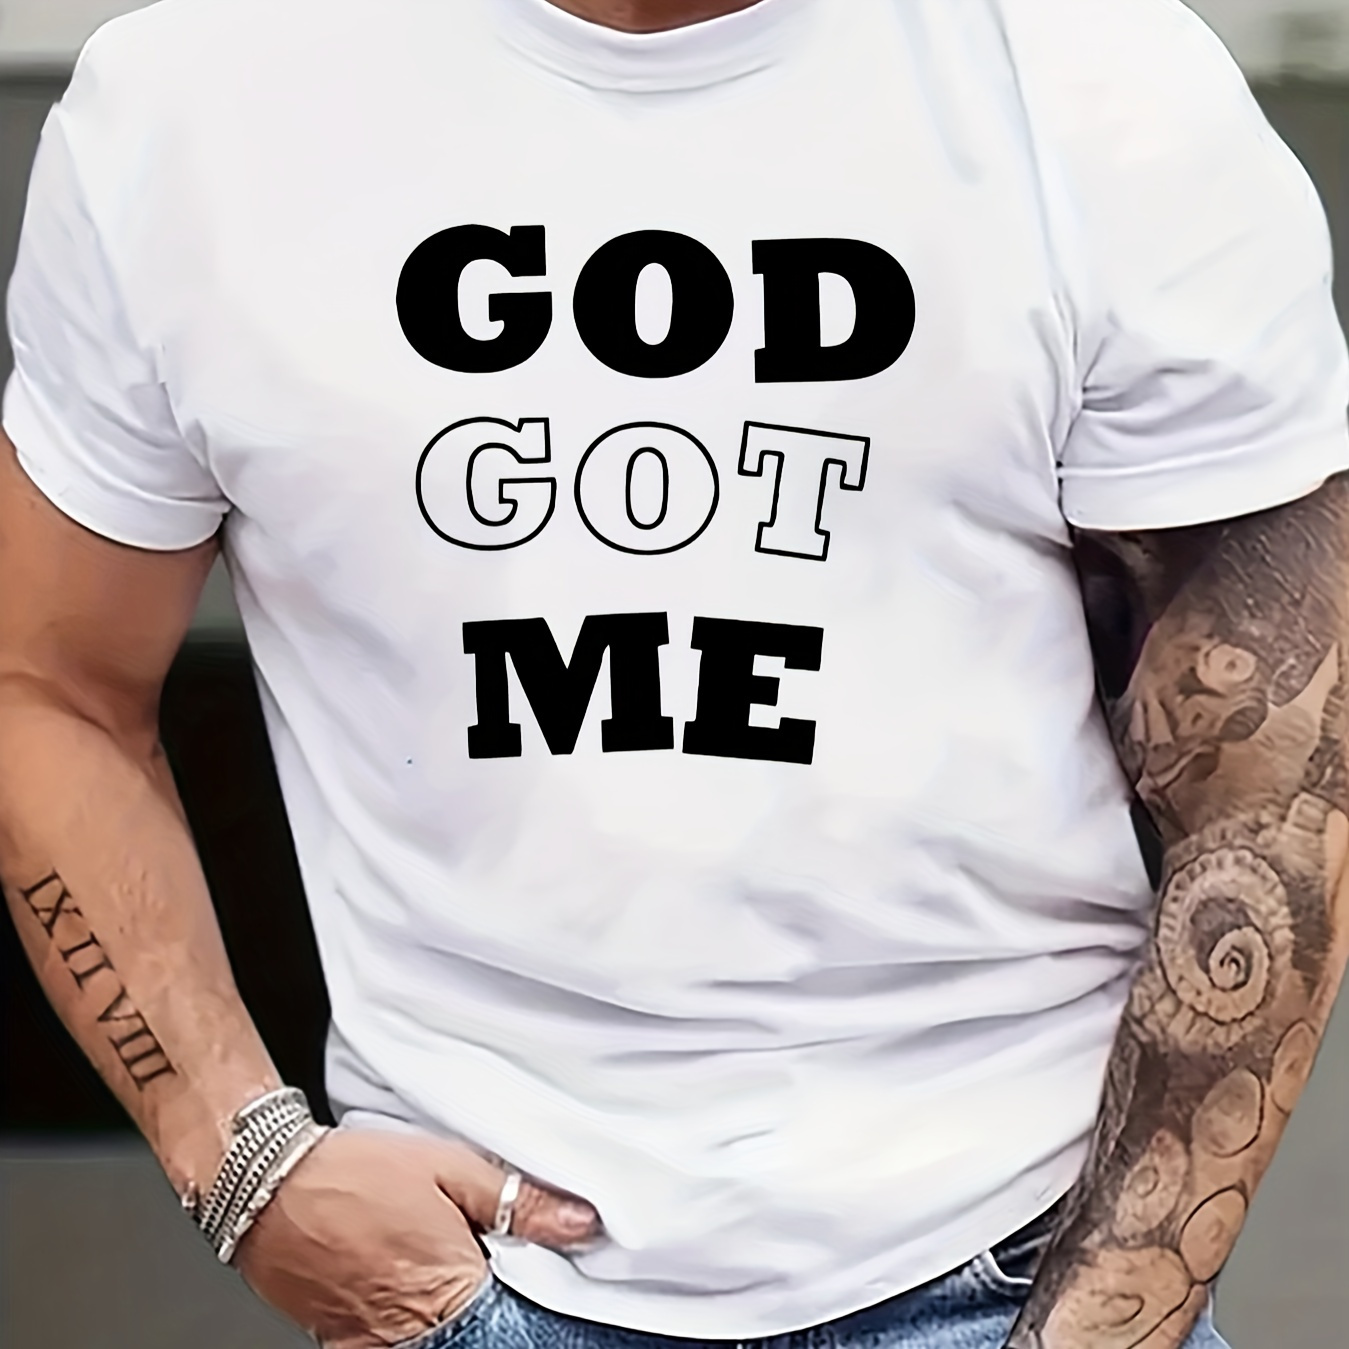 

God Got Me Print Men's Casual T-shirt, Short Sleeve Versatile Comfy Tee Tops For Summer Outdoor